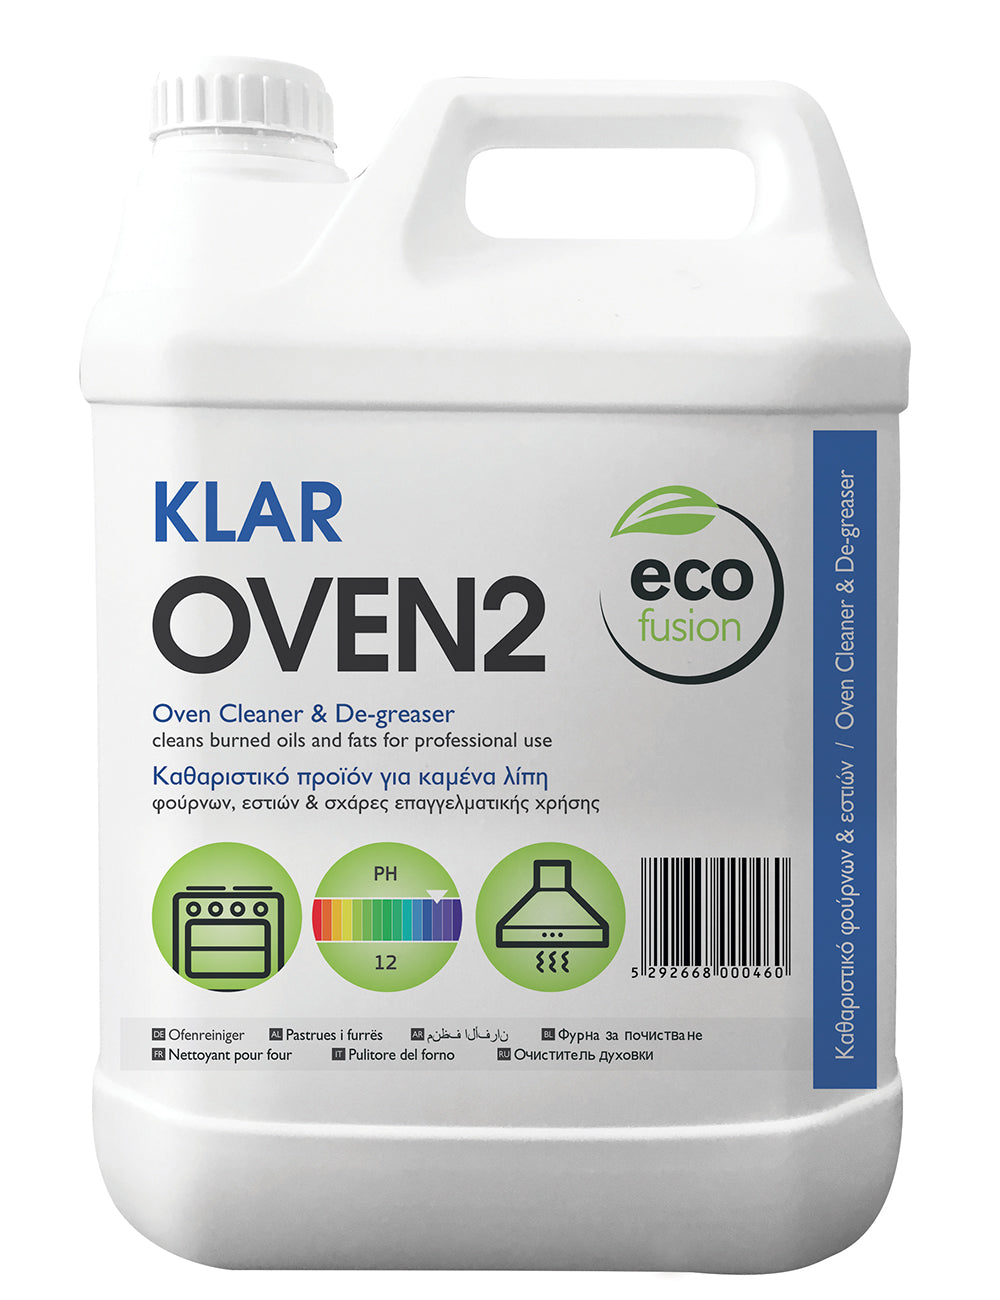 KLAR OVEN2 - Oven cleaner detergent - 5L – ecofusionchemicals